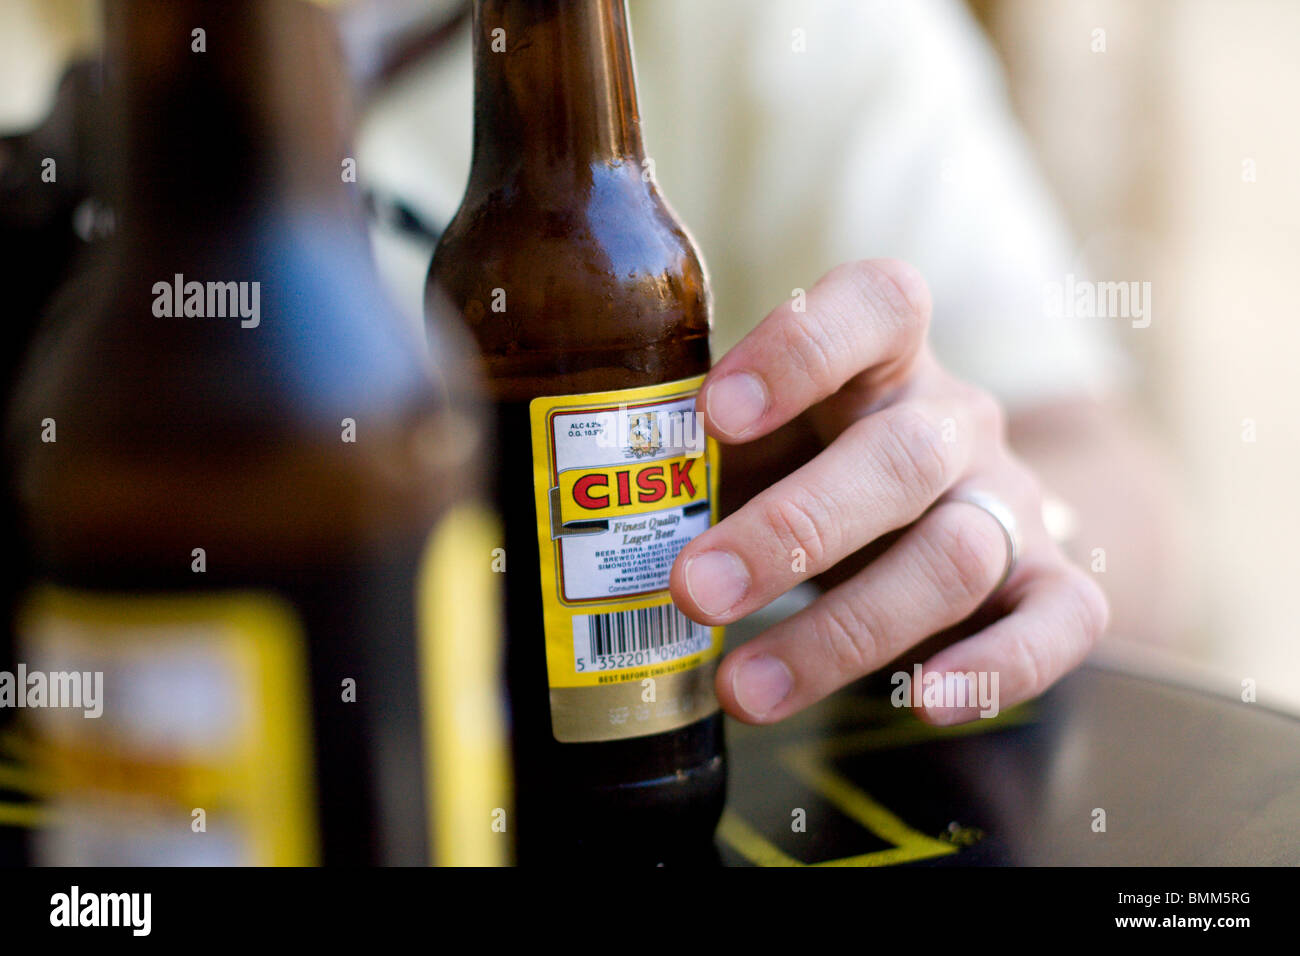 Cisk Beer in Malta Stock Photo